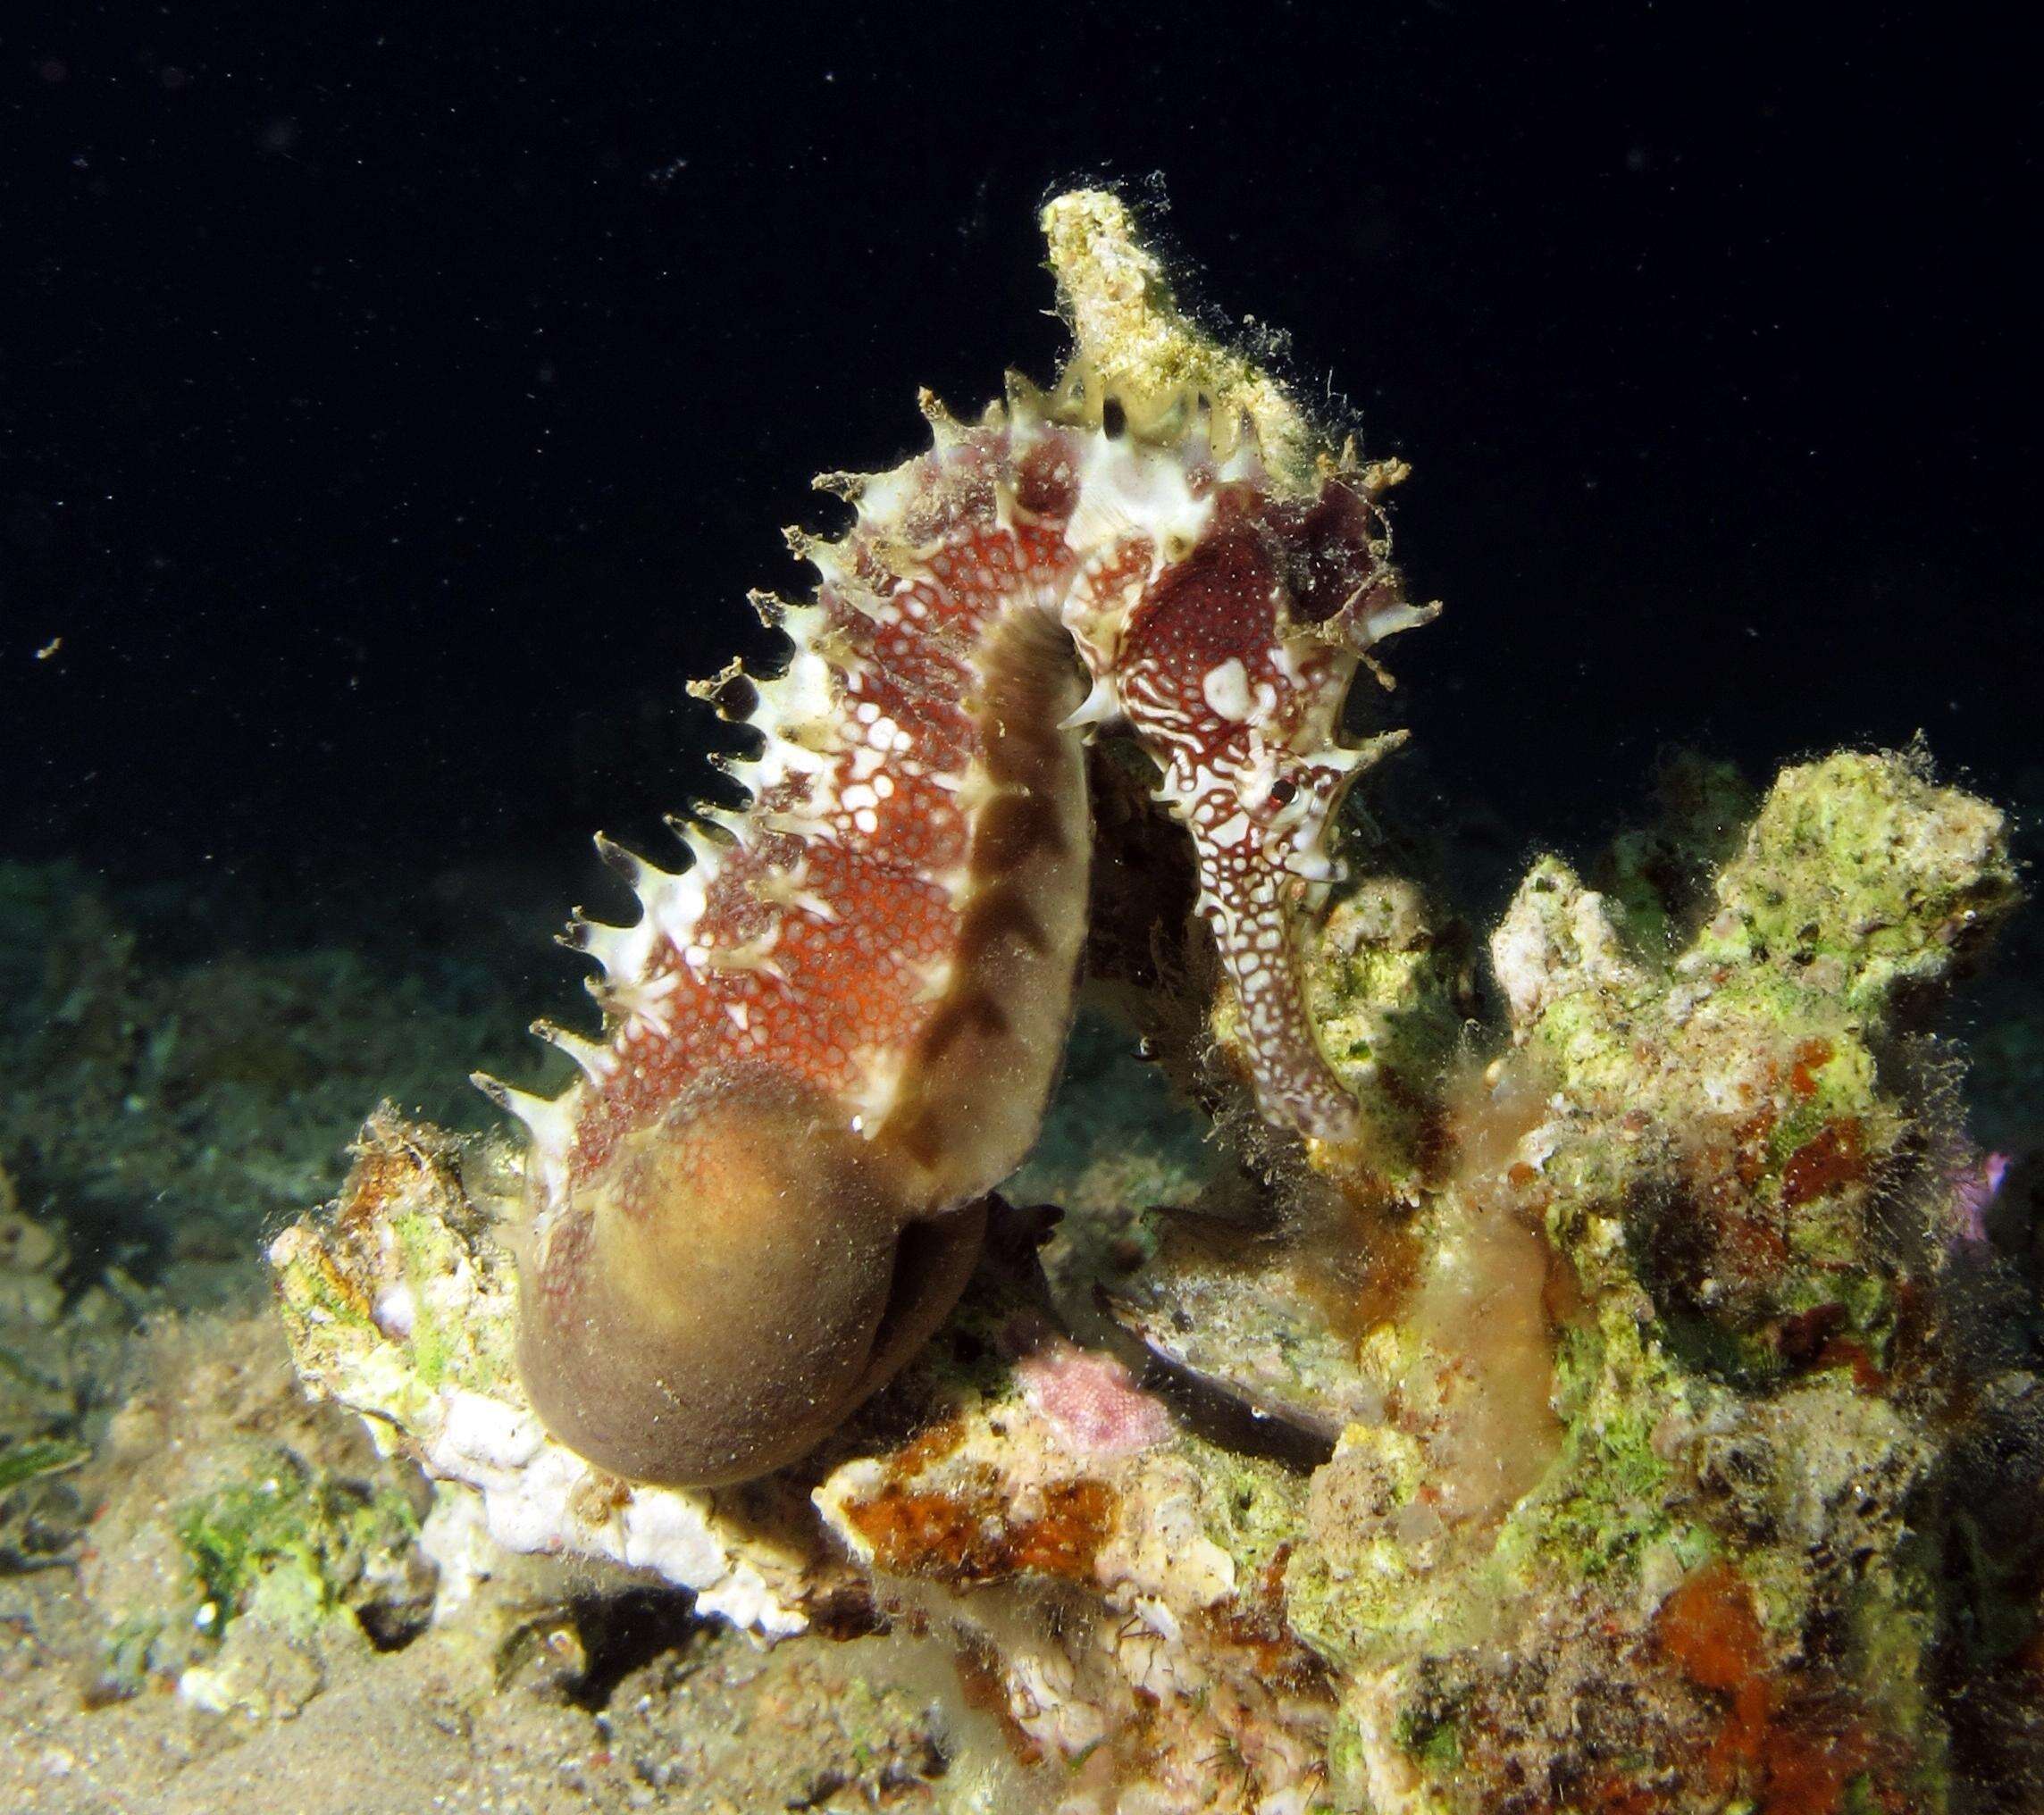 A pregnant male seahorse